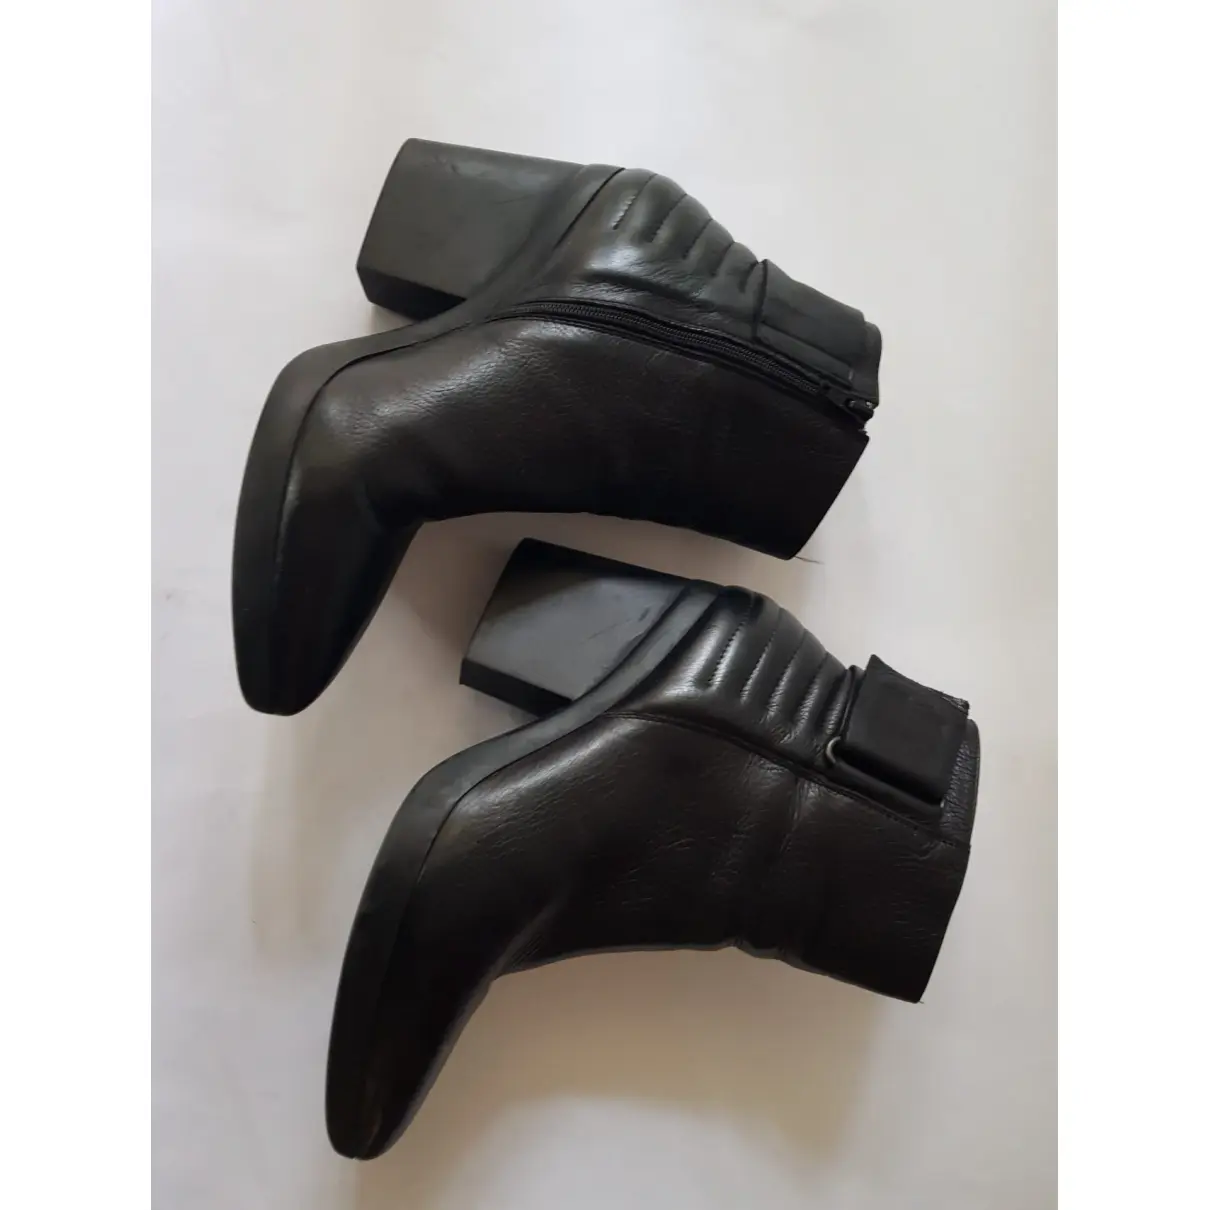 Leather ankle boots Vic Matié